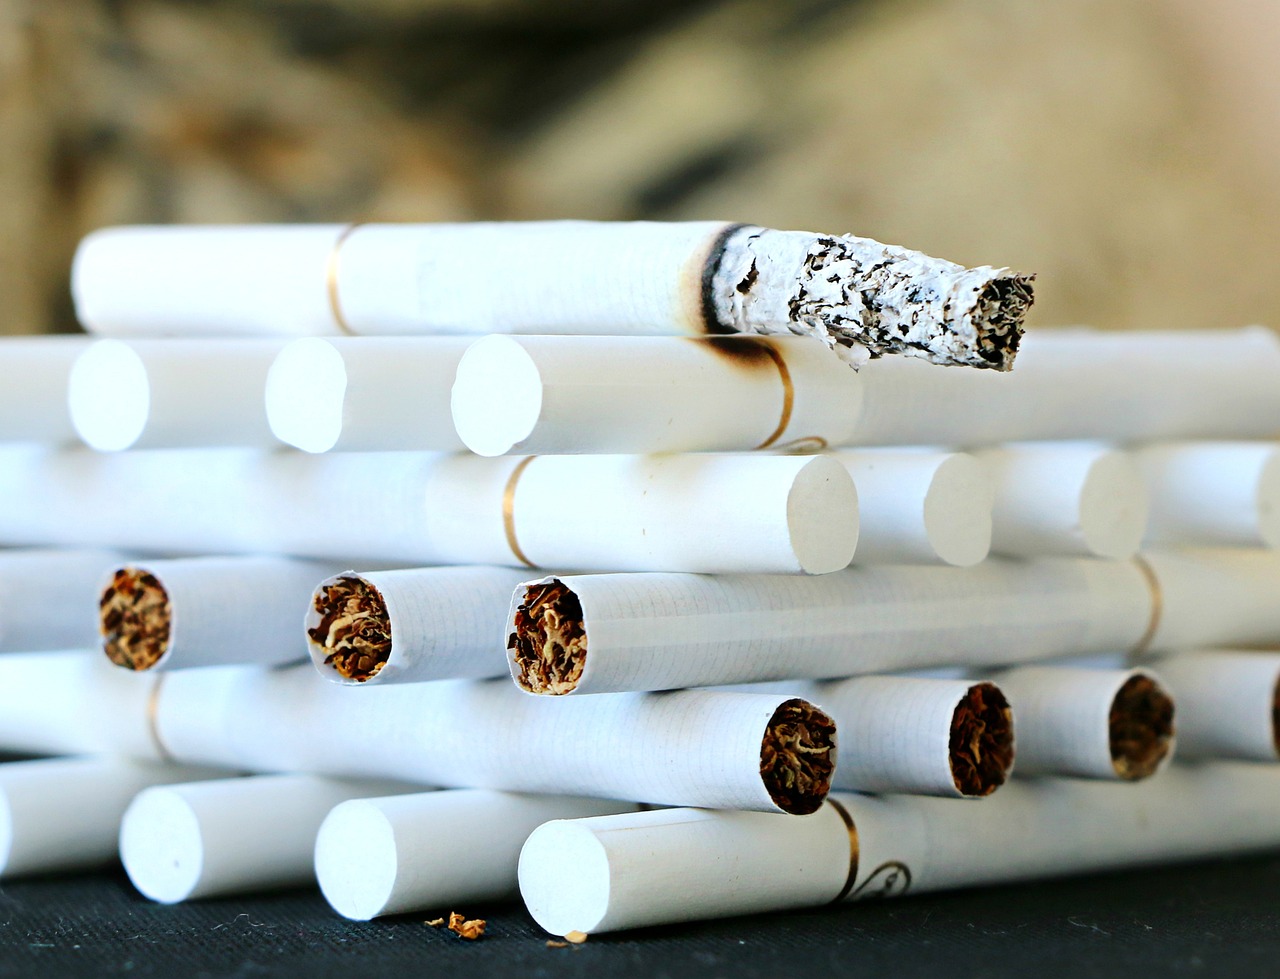 Tobacco-health article